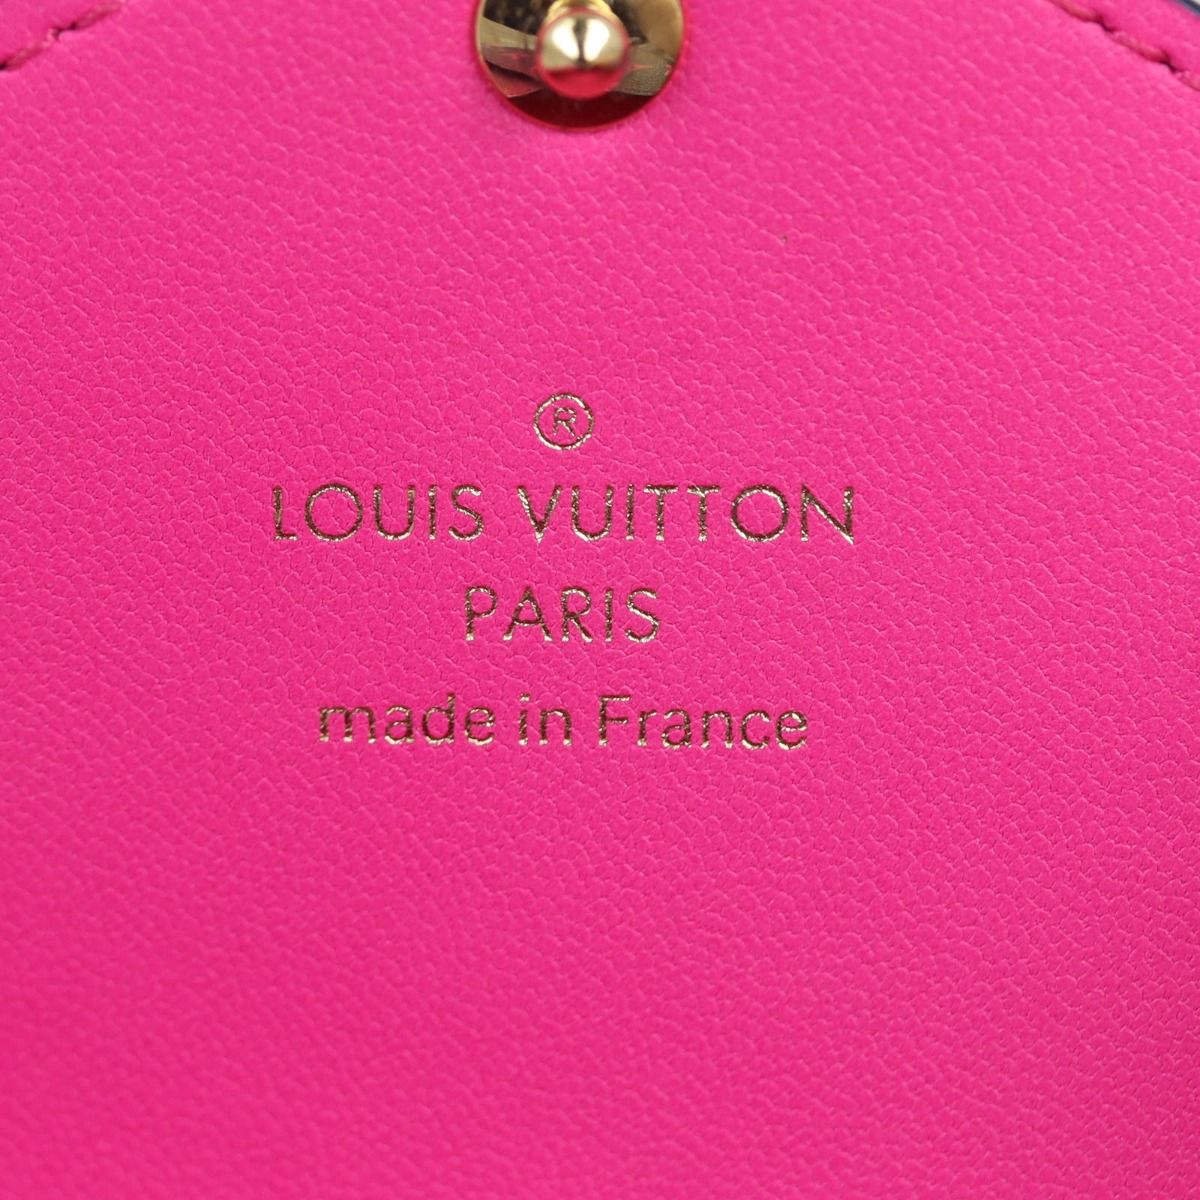 New in Box Louis Vuitton Limited Edition Pochette Trio Bag at